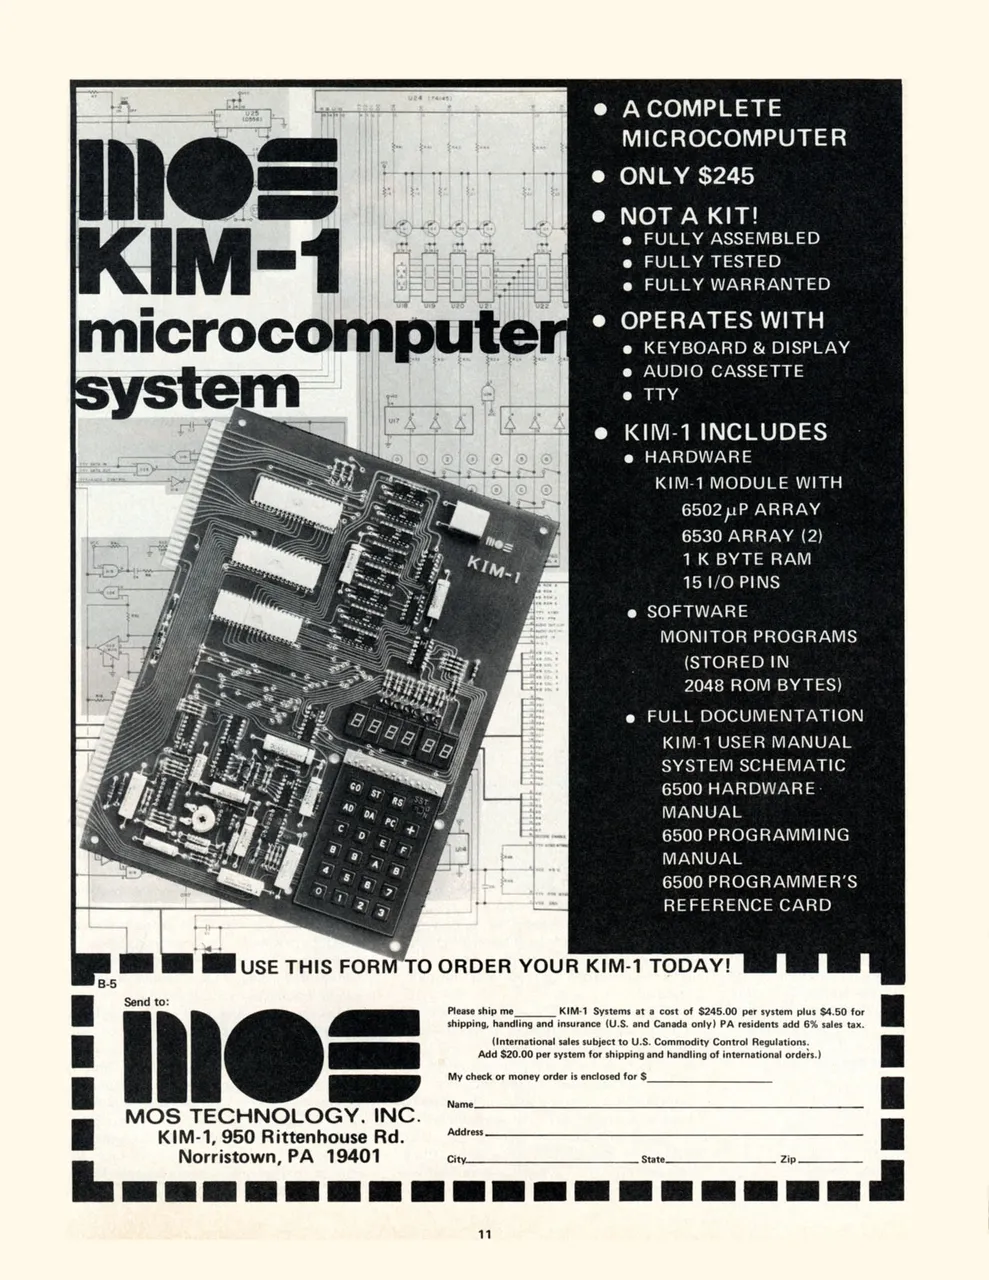 The MOS Technology KIM-1 Single-Board Computer